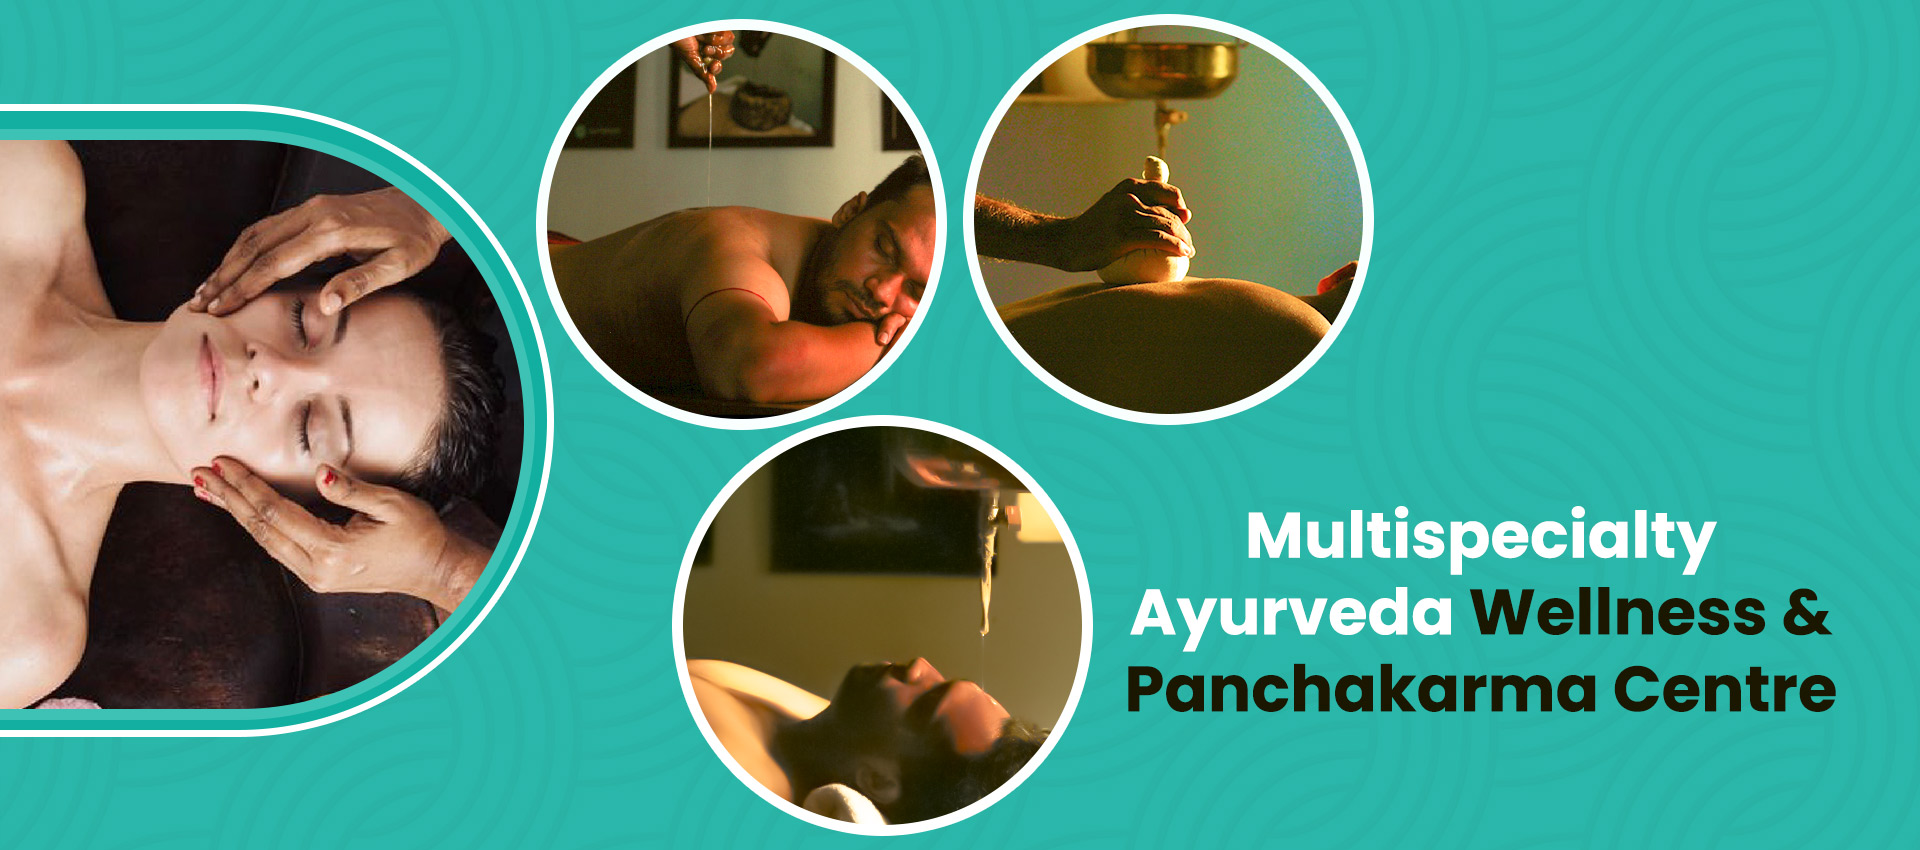 Multispecialty Ayurveda Wellness Panchakarma Centre